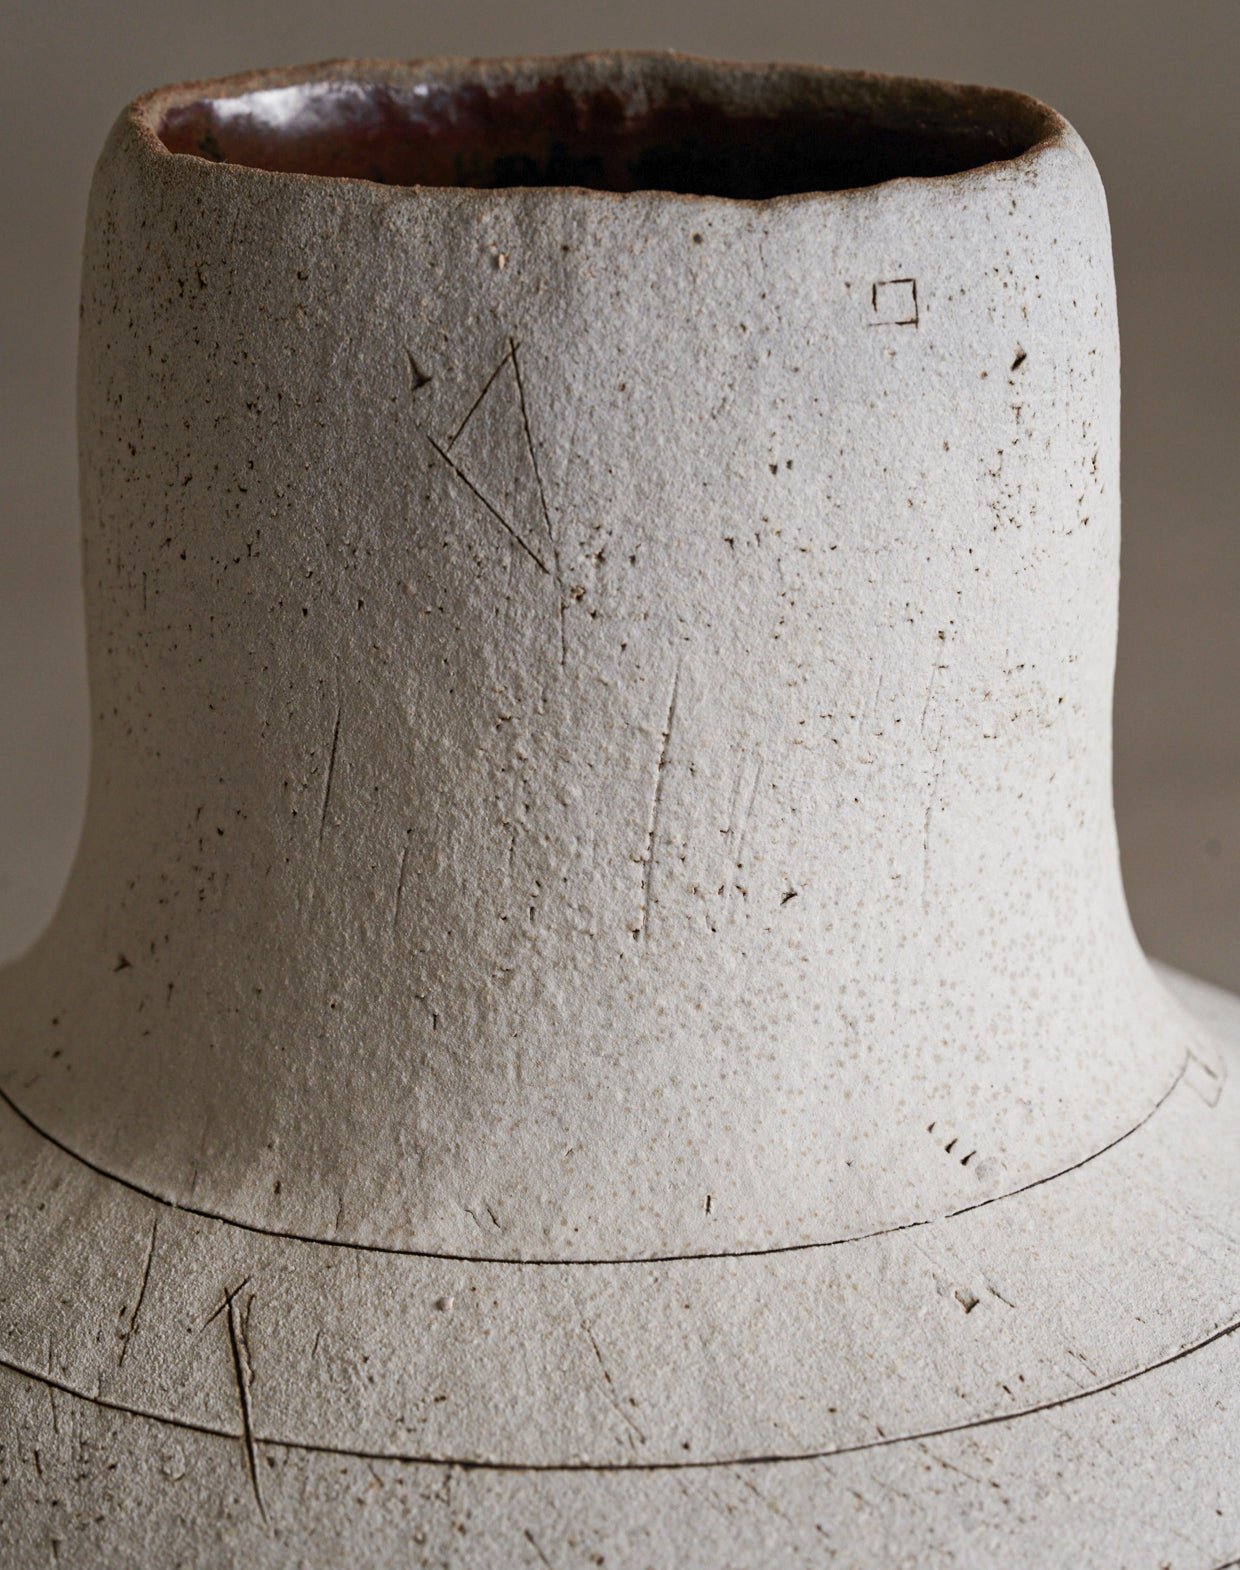 Rick Hintze Coiled Stoneware Vessel, "Untitled" No. 16